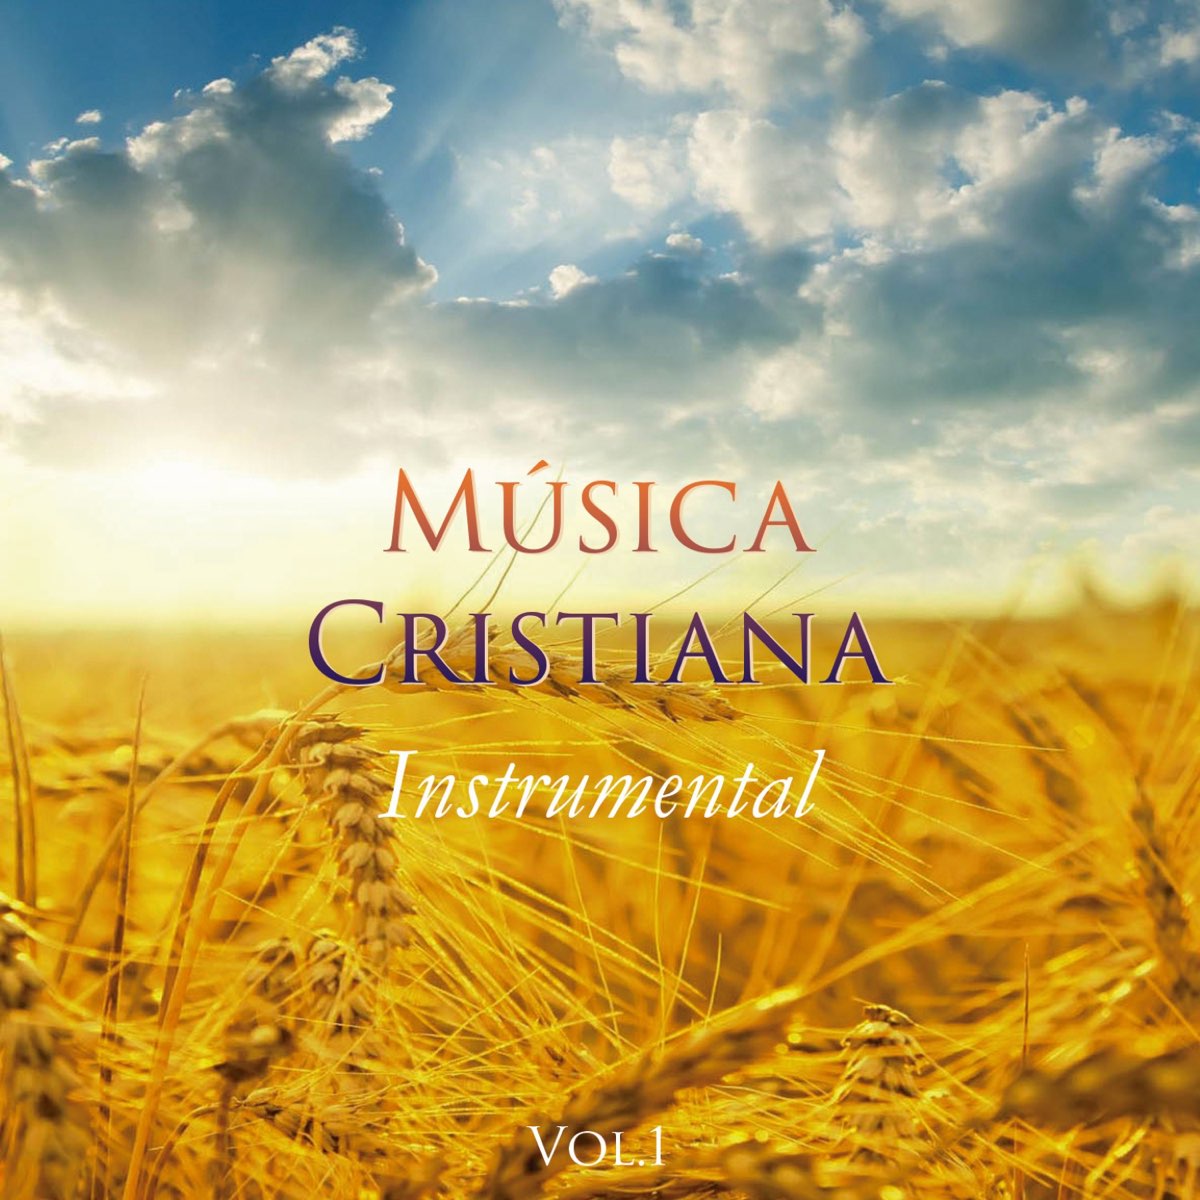 Música Cristiana Instrumental, Vol. 1 de Varios Artistas en Apple Music